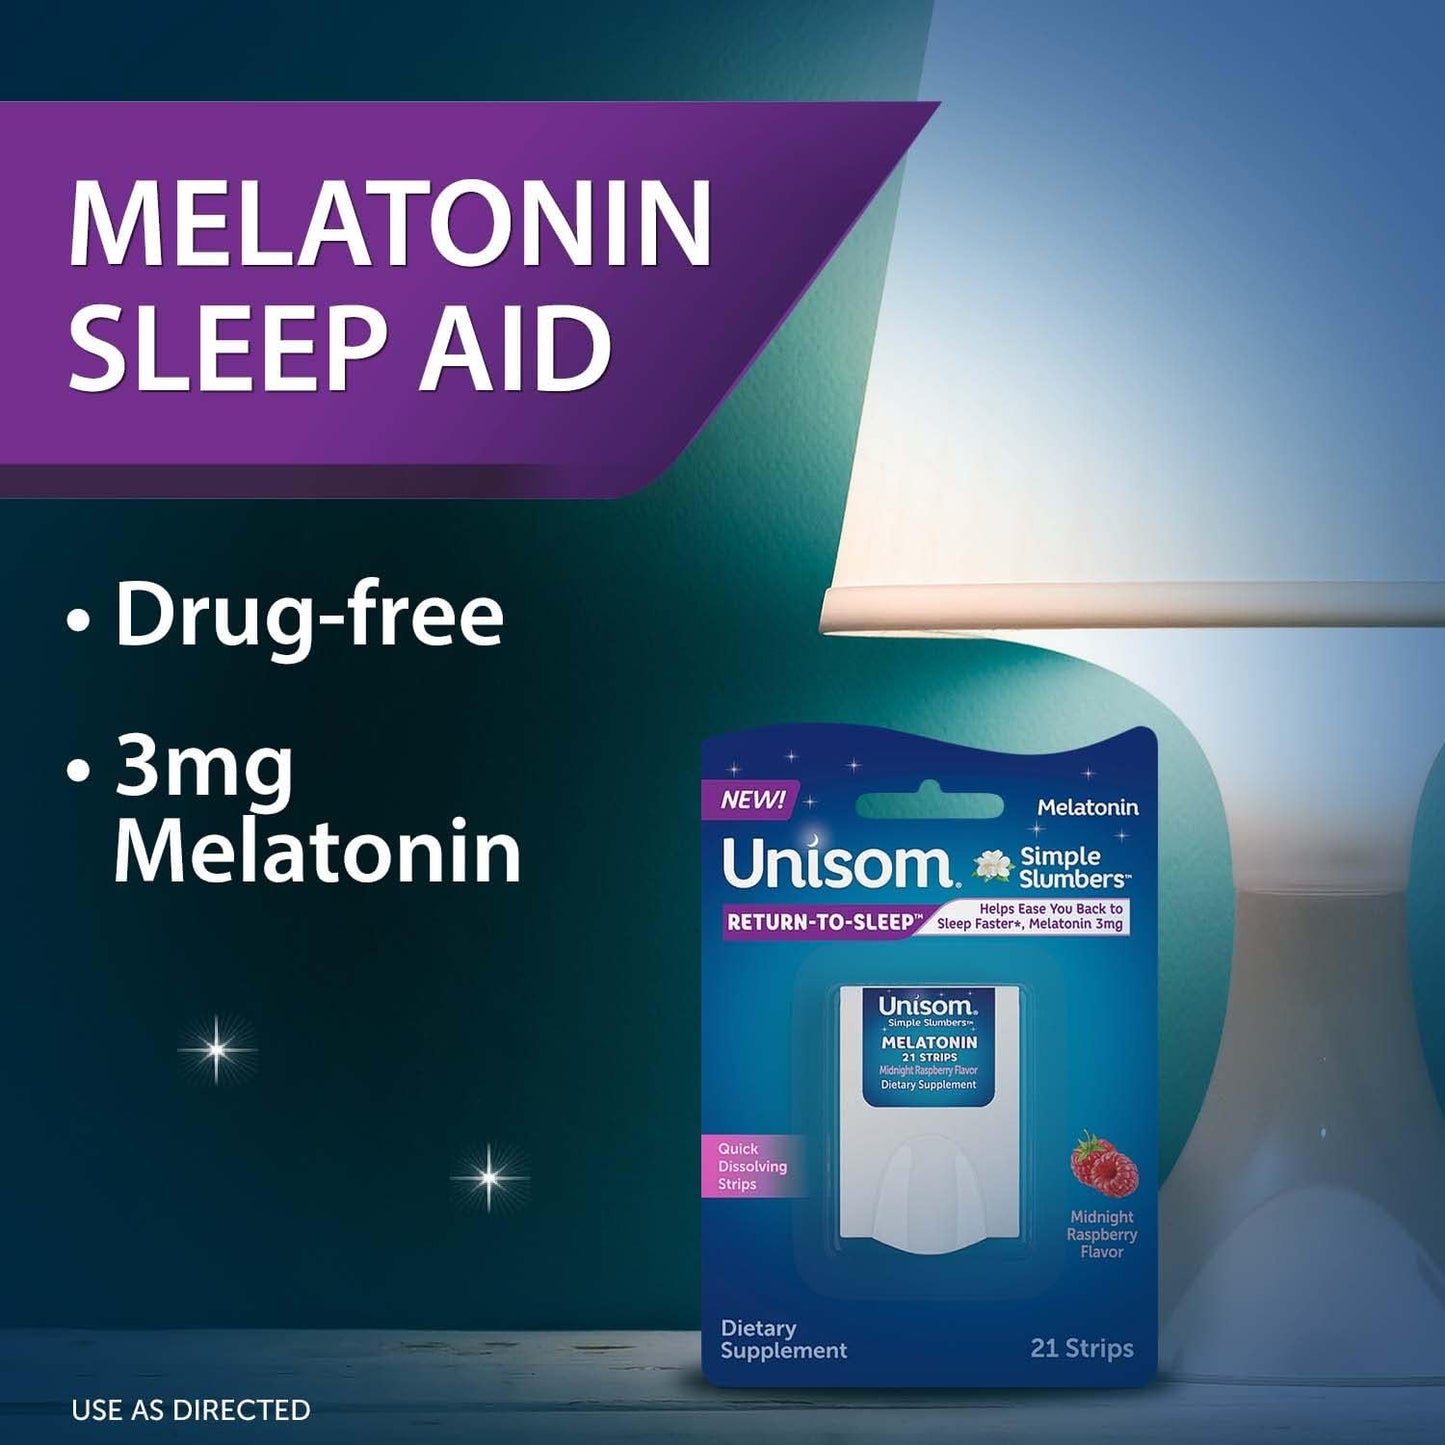 Unisom Simple Slumbers Return-to-Sleep Dissolving Strips 21-Count, Melatonin 3mg, Midnight Raspberry